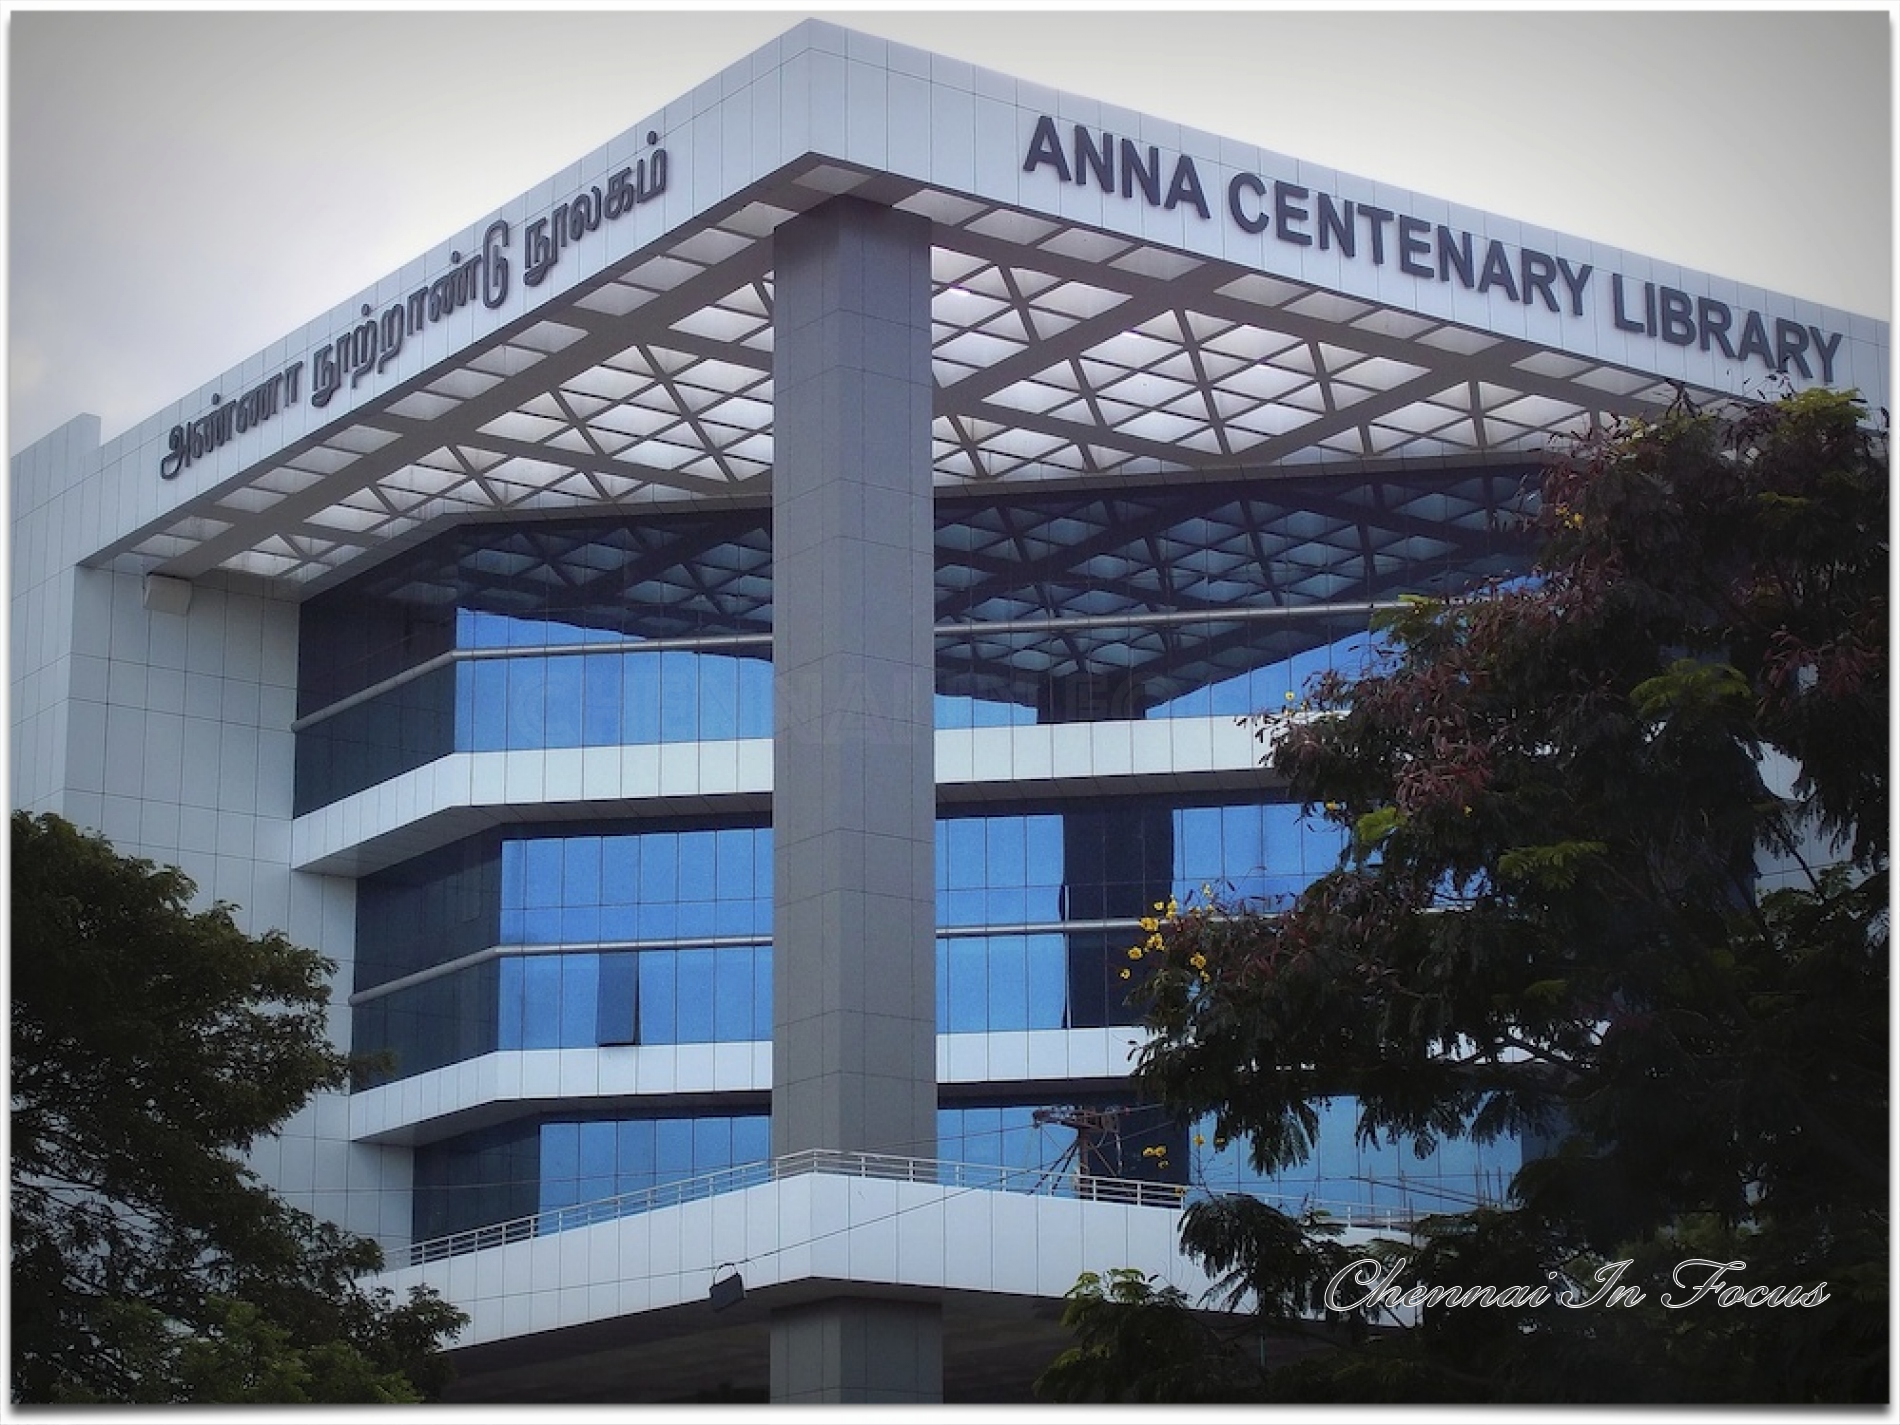 Anna Centenary Library - Chennai In Focus